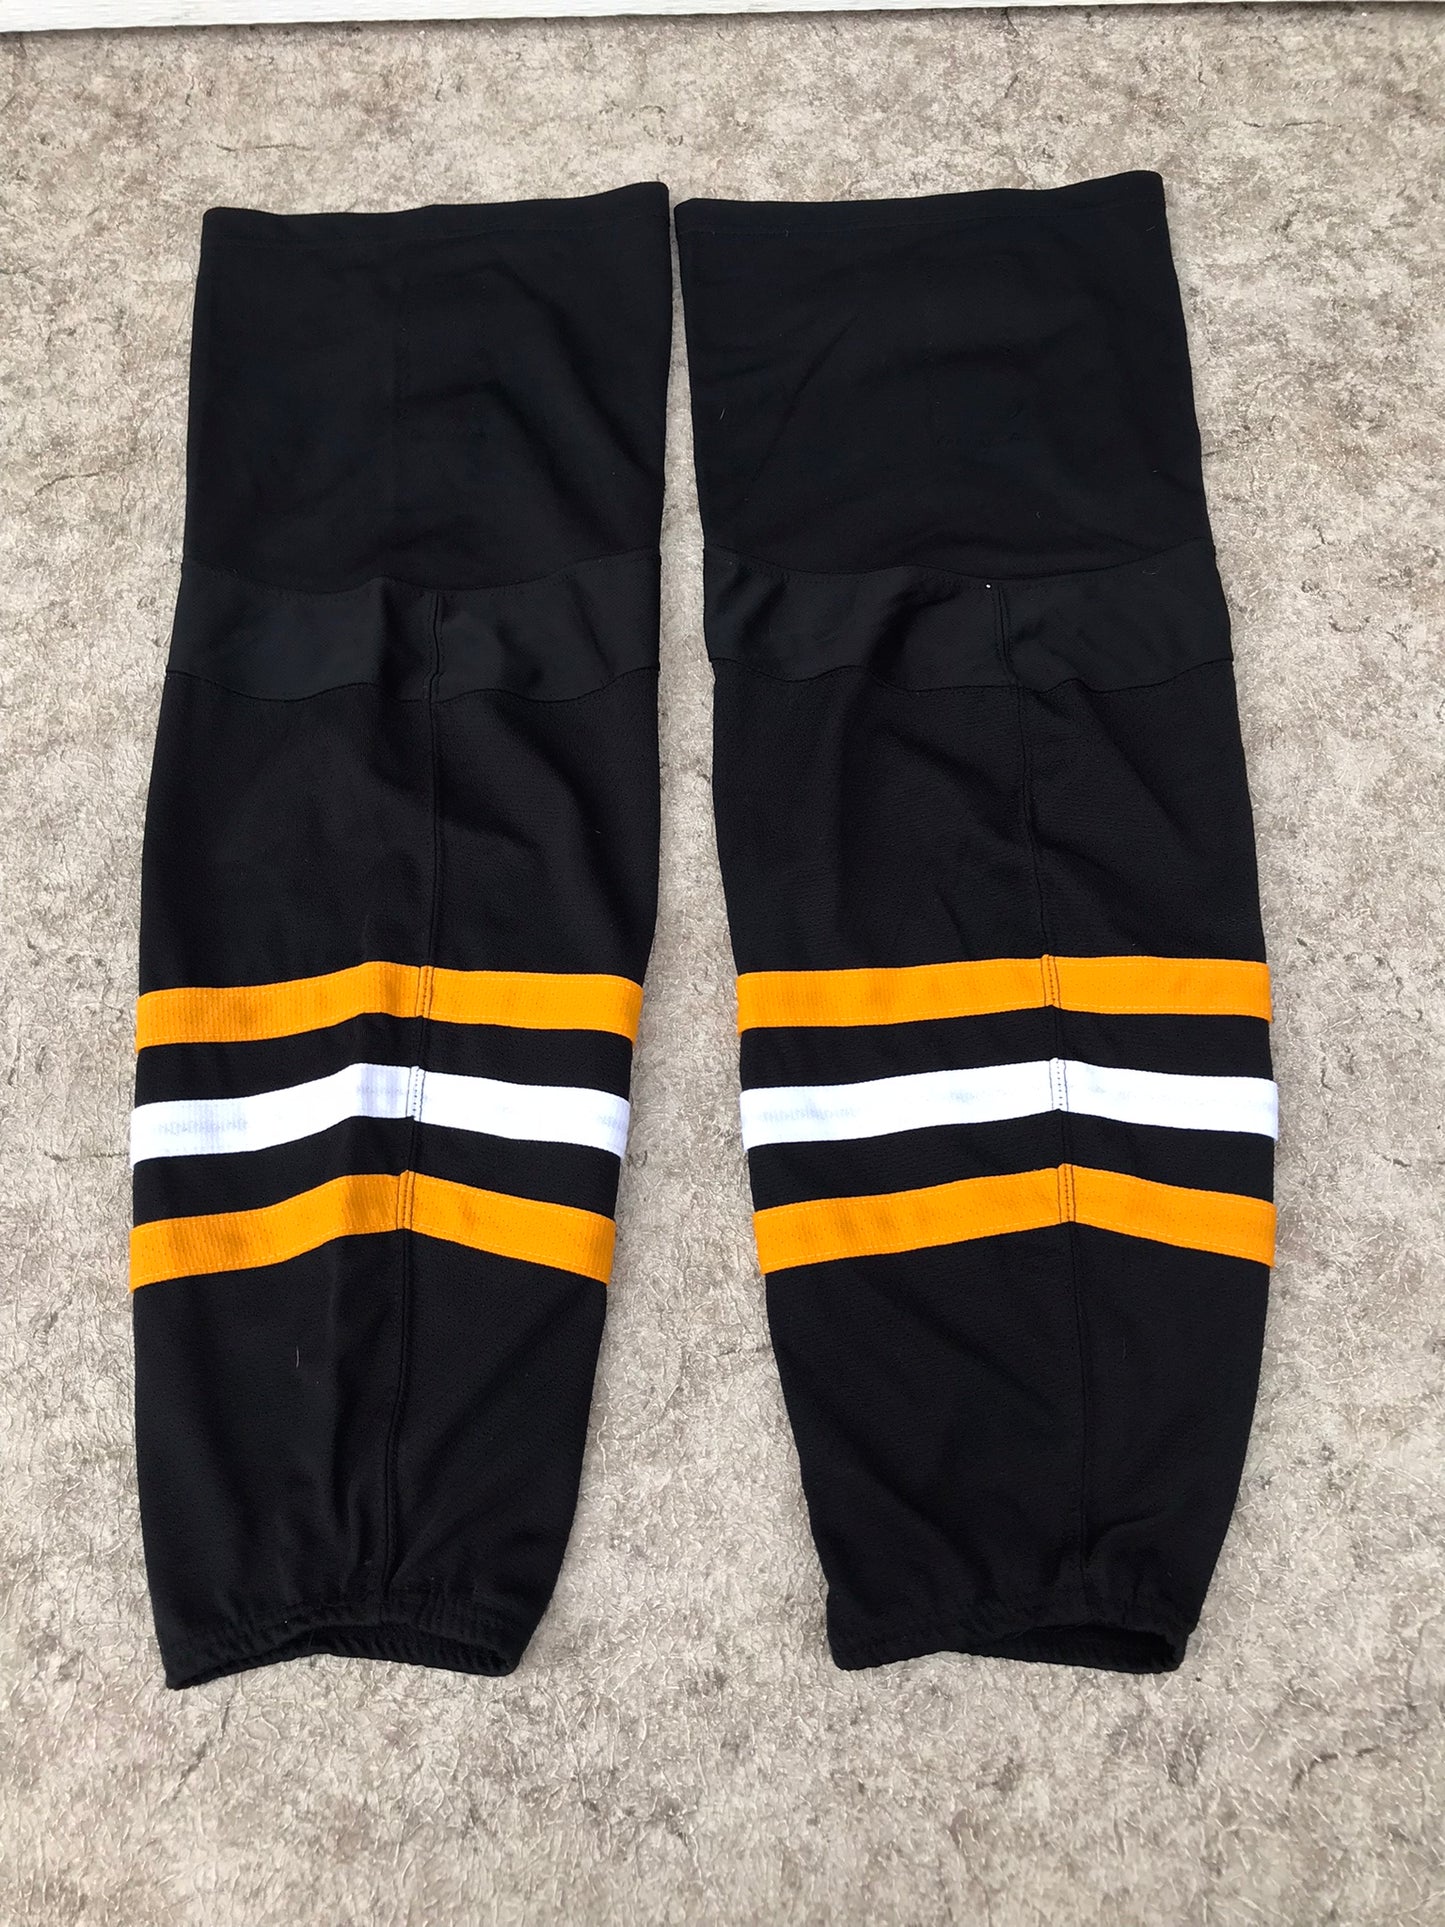 Hockey Socks 16 Inches Boston Bruins Colors Pro Quality